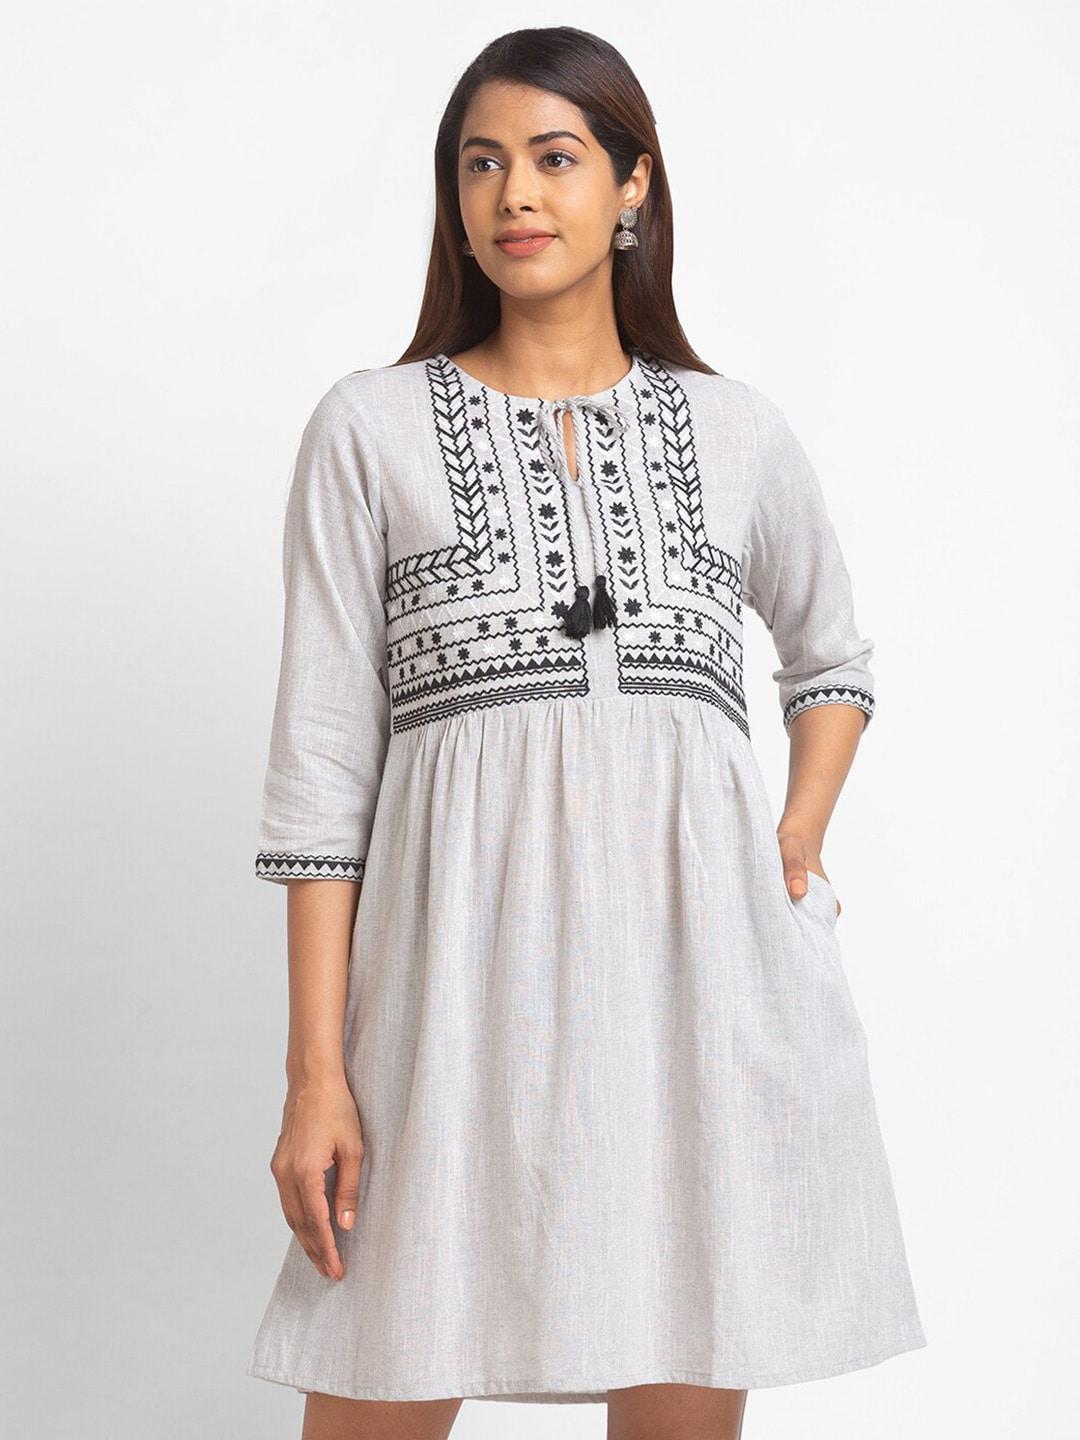 globus-grey-ethnic-motifs-dress